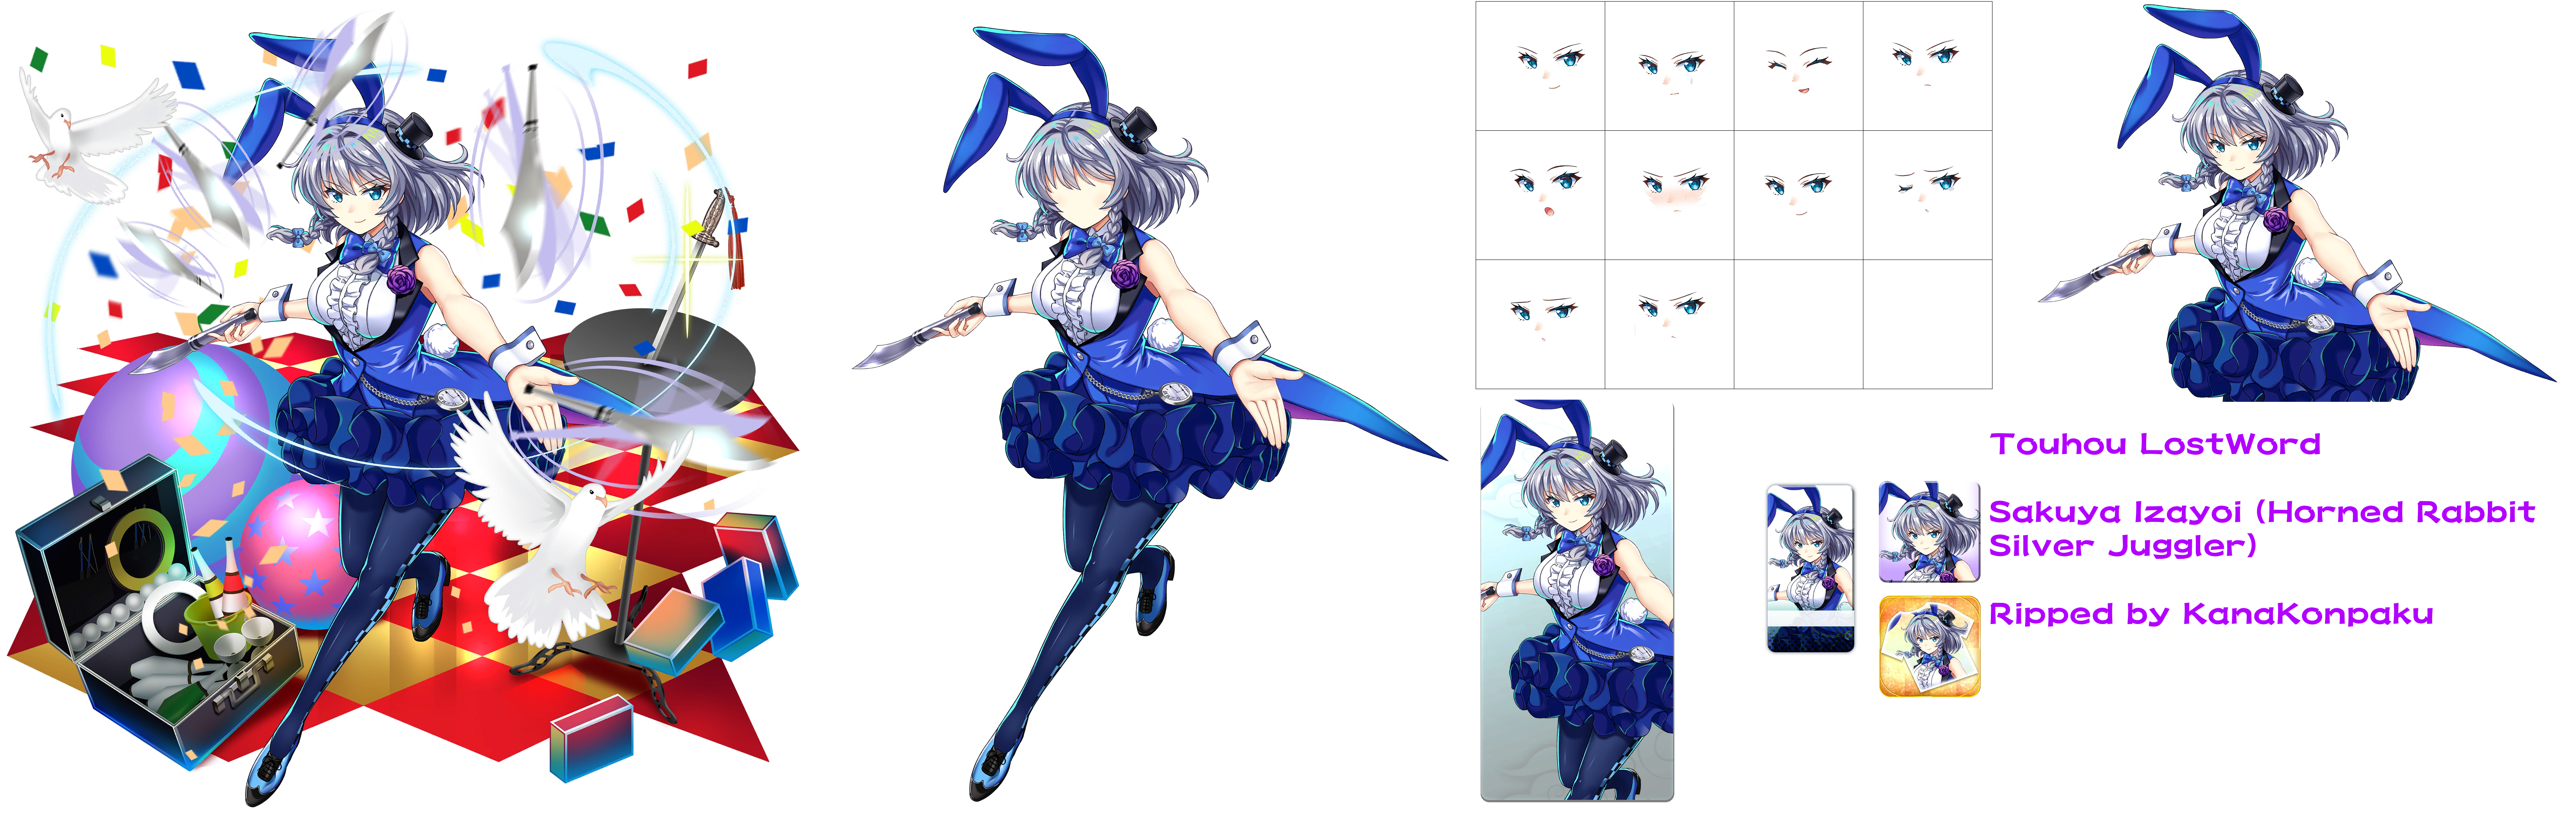 Sakuya Izayoi (Horned Rabbit Silver Juggler)